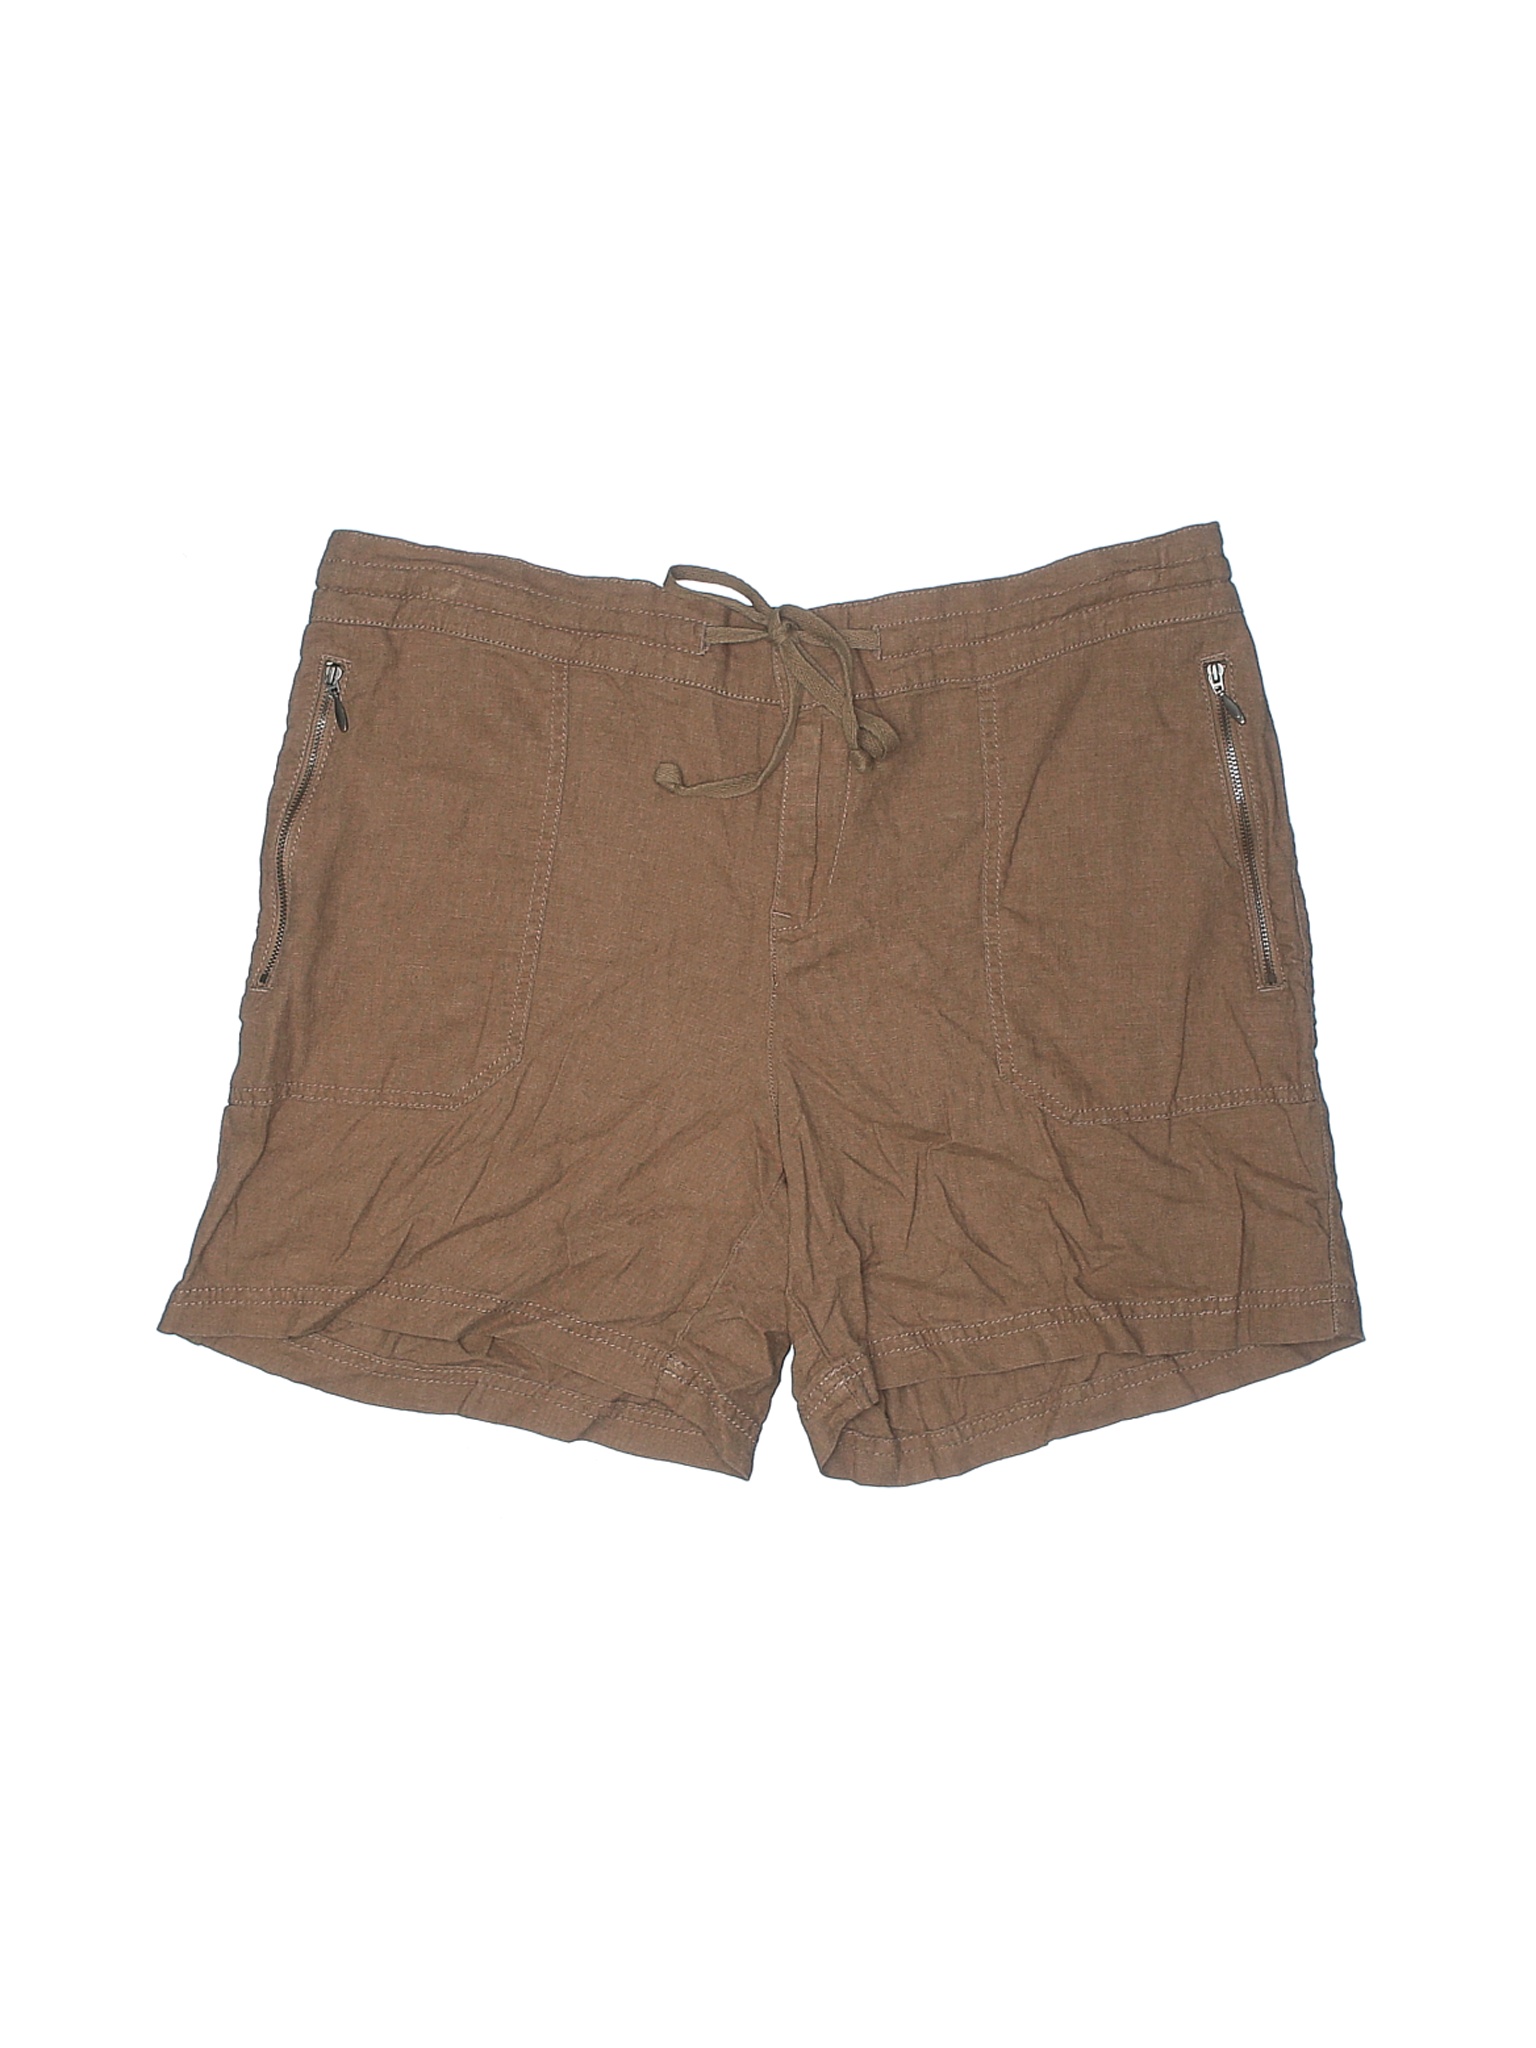 Supplies Women Brown Khaki Shorts 14 | eBay